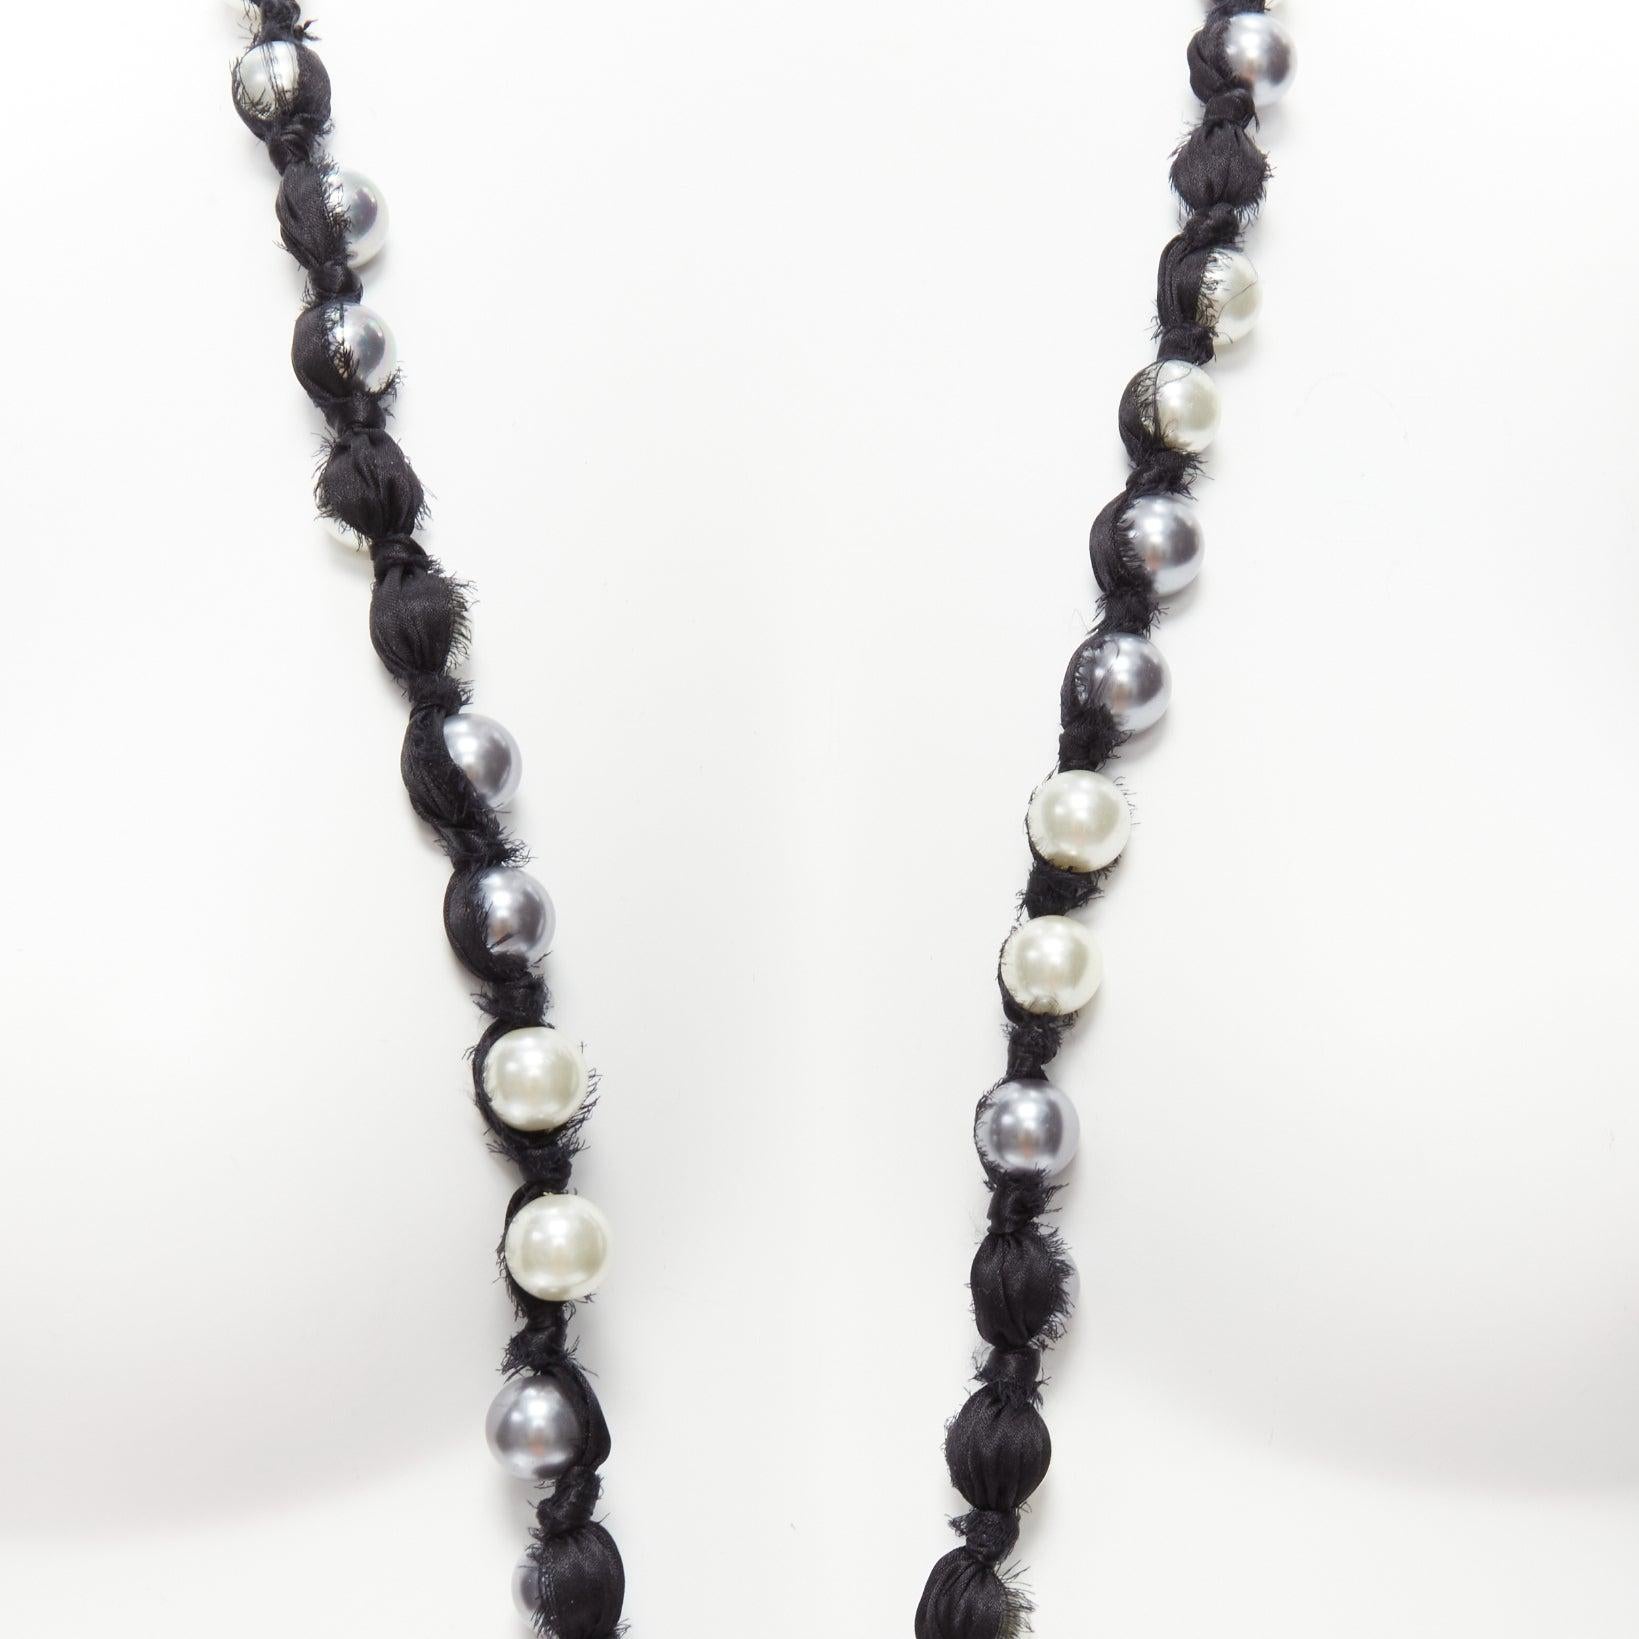 LANVIN ALBER ELBAZ cream charcoal black pearl silk ribbon wrapped long necklace
Reference: SNKO/A00337
Brand: Lanvin
Designer: Alber Elbaz
Material: Faux Pearl, Fabric
Color: Pearl, Black
Pattern: Solid
Closure: Self Tie

CONDITION:
Condition: